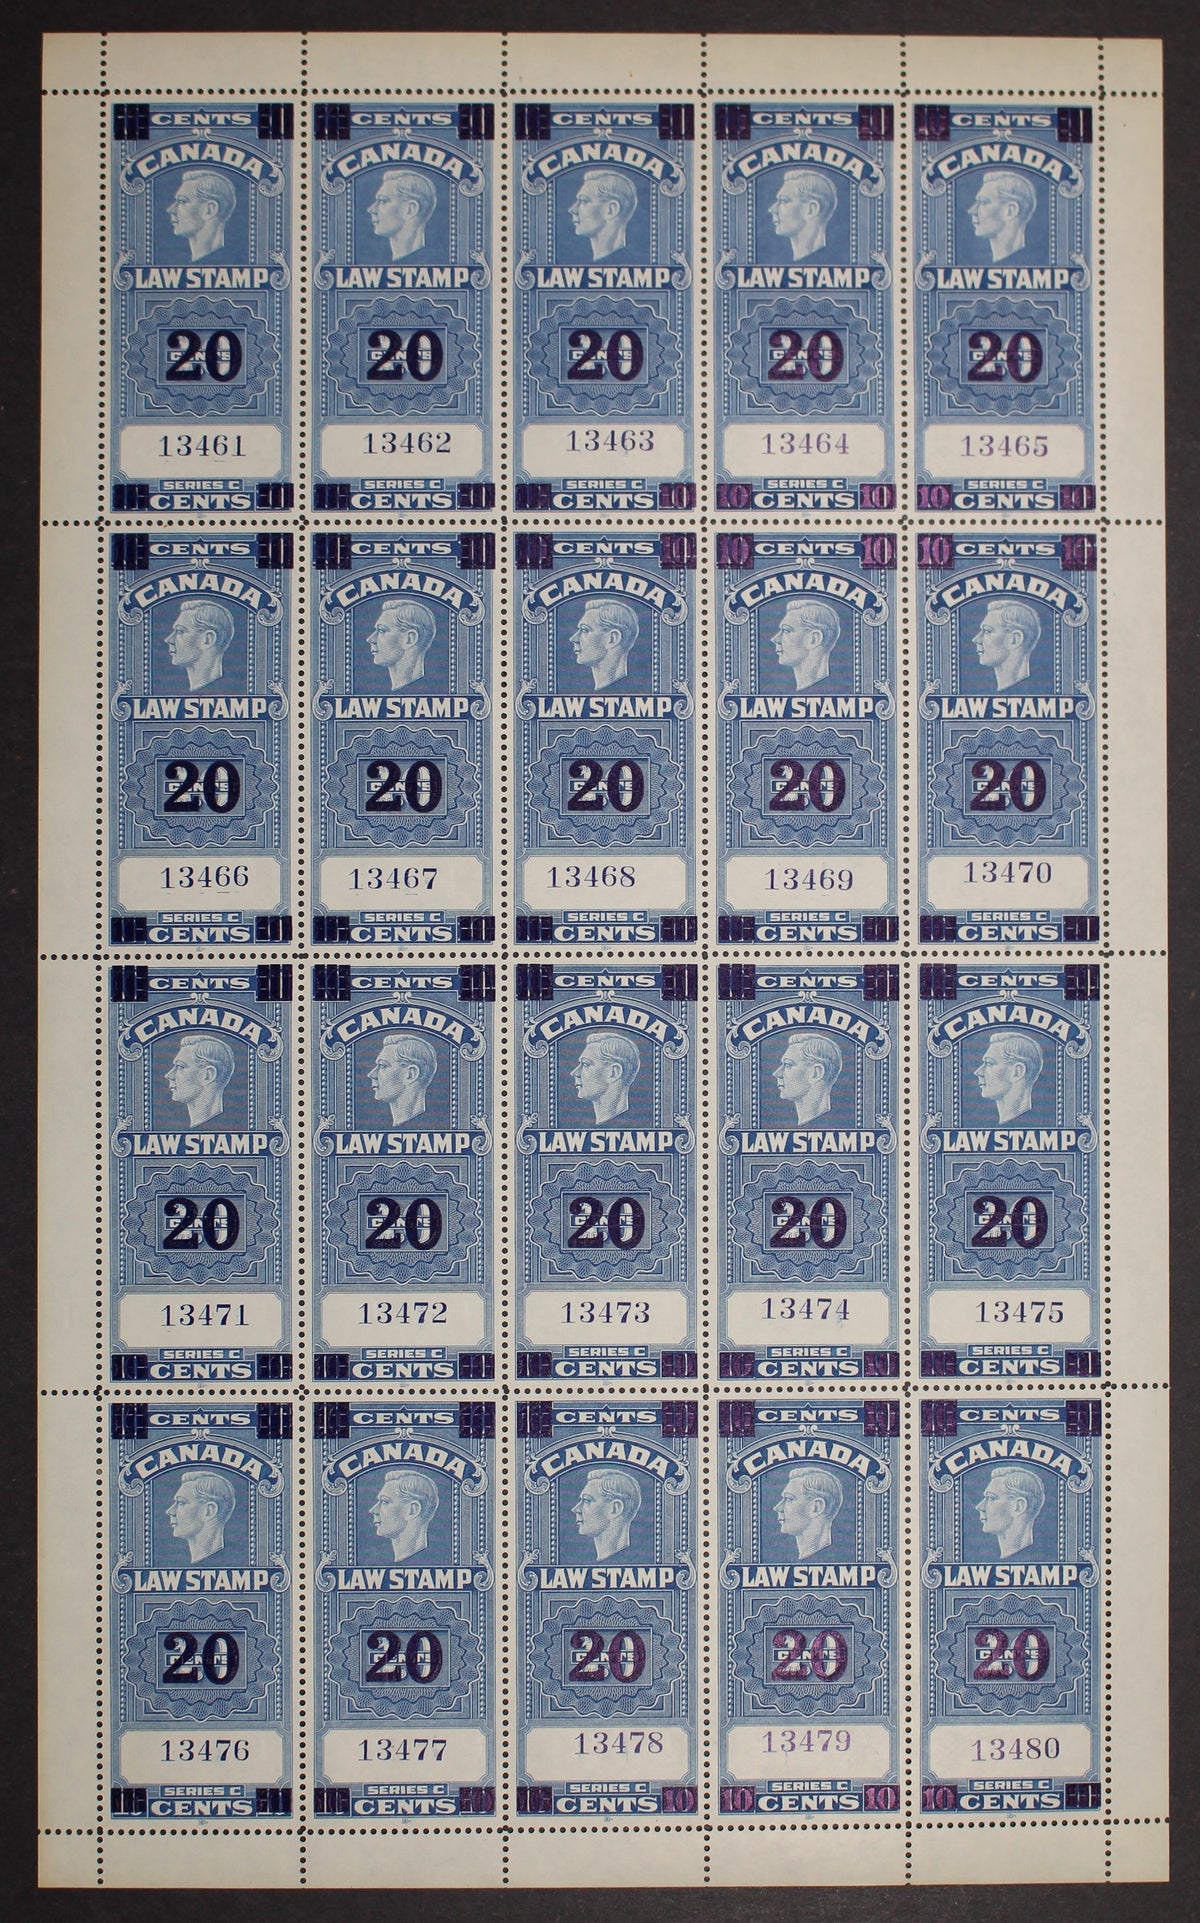 0022SC2204 - FSC22 - Mint, Full Sheet of 20